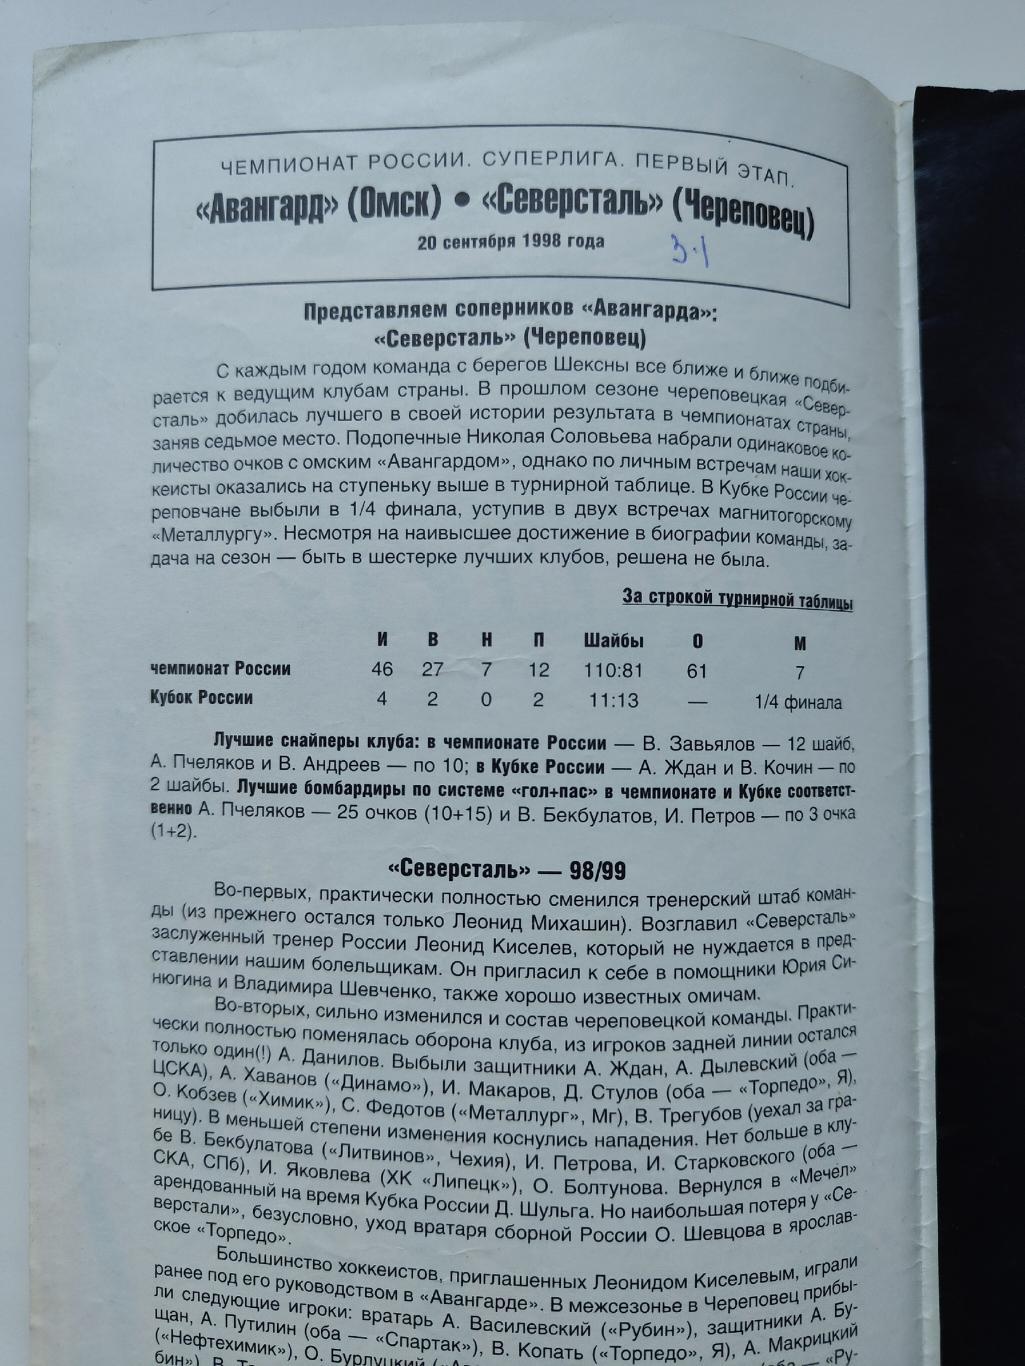 Авангард Омск - Северсталь Череповец 20 сентября 1998 1